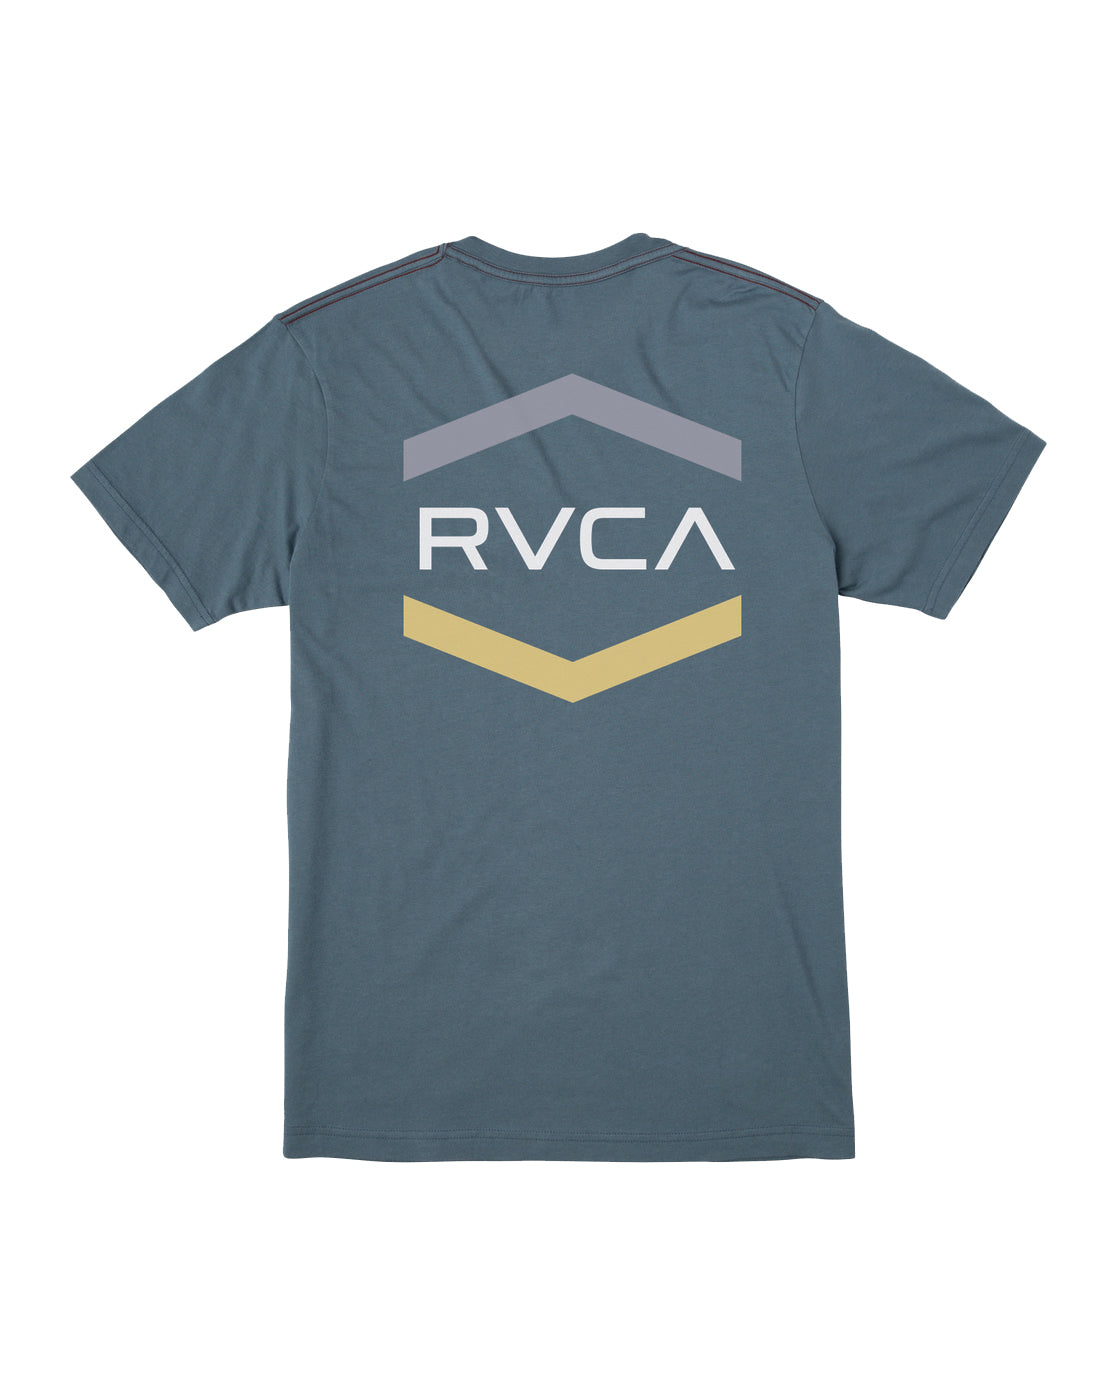 RVCA Airborne Tee